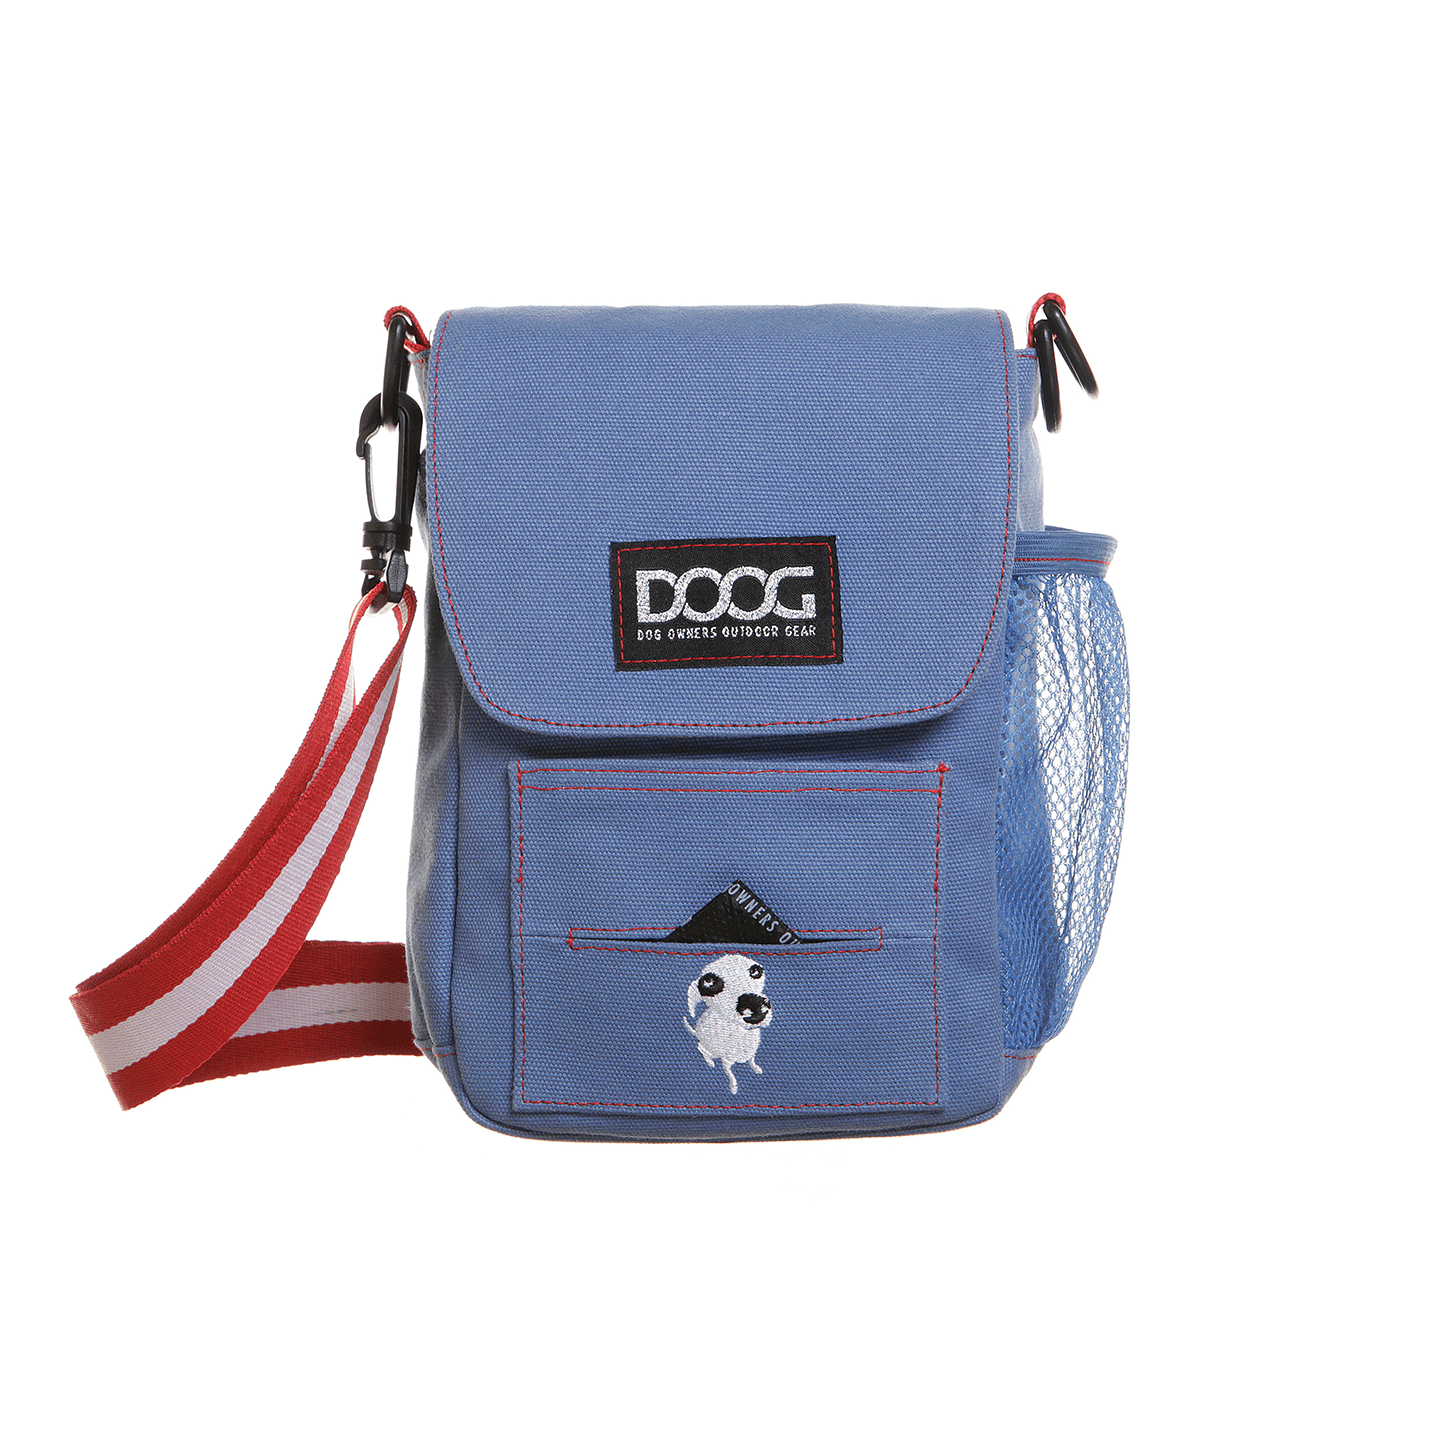 Doog USA Fashion Accesories Doog Shoulder Bag - Blue